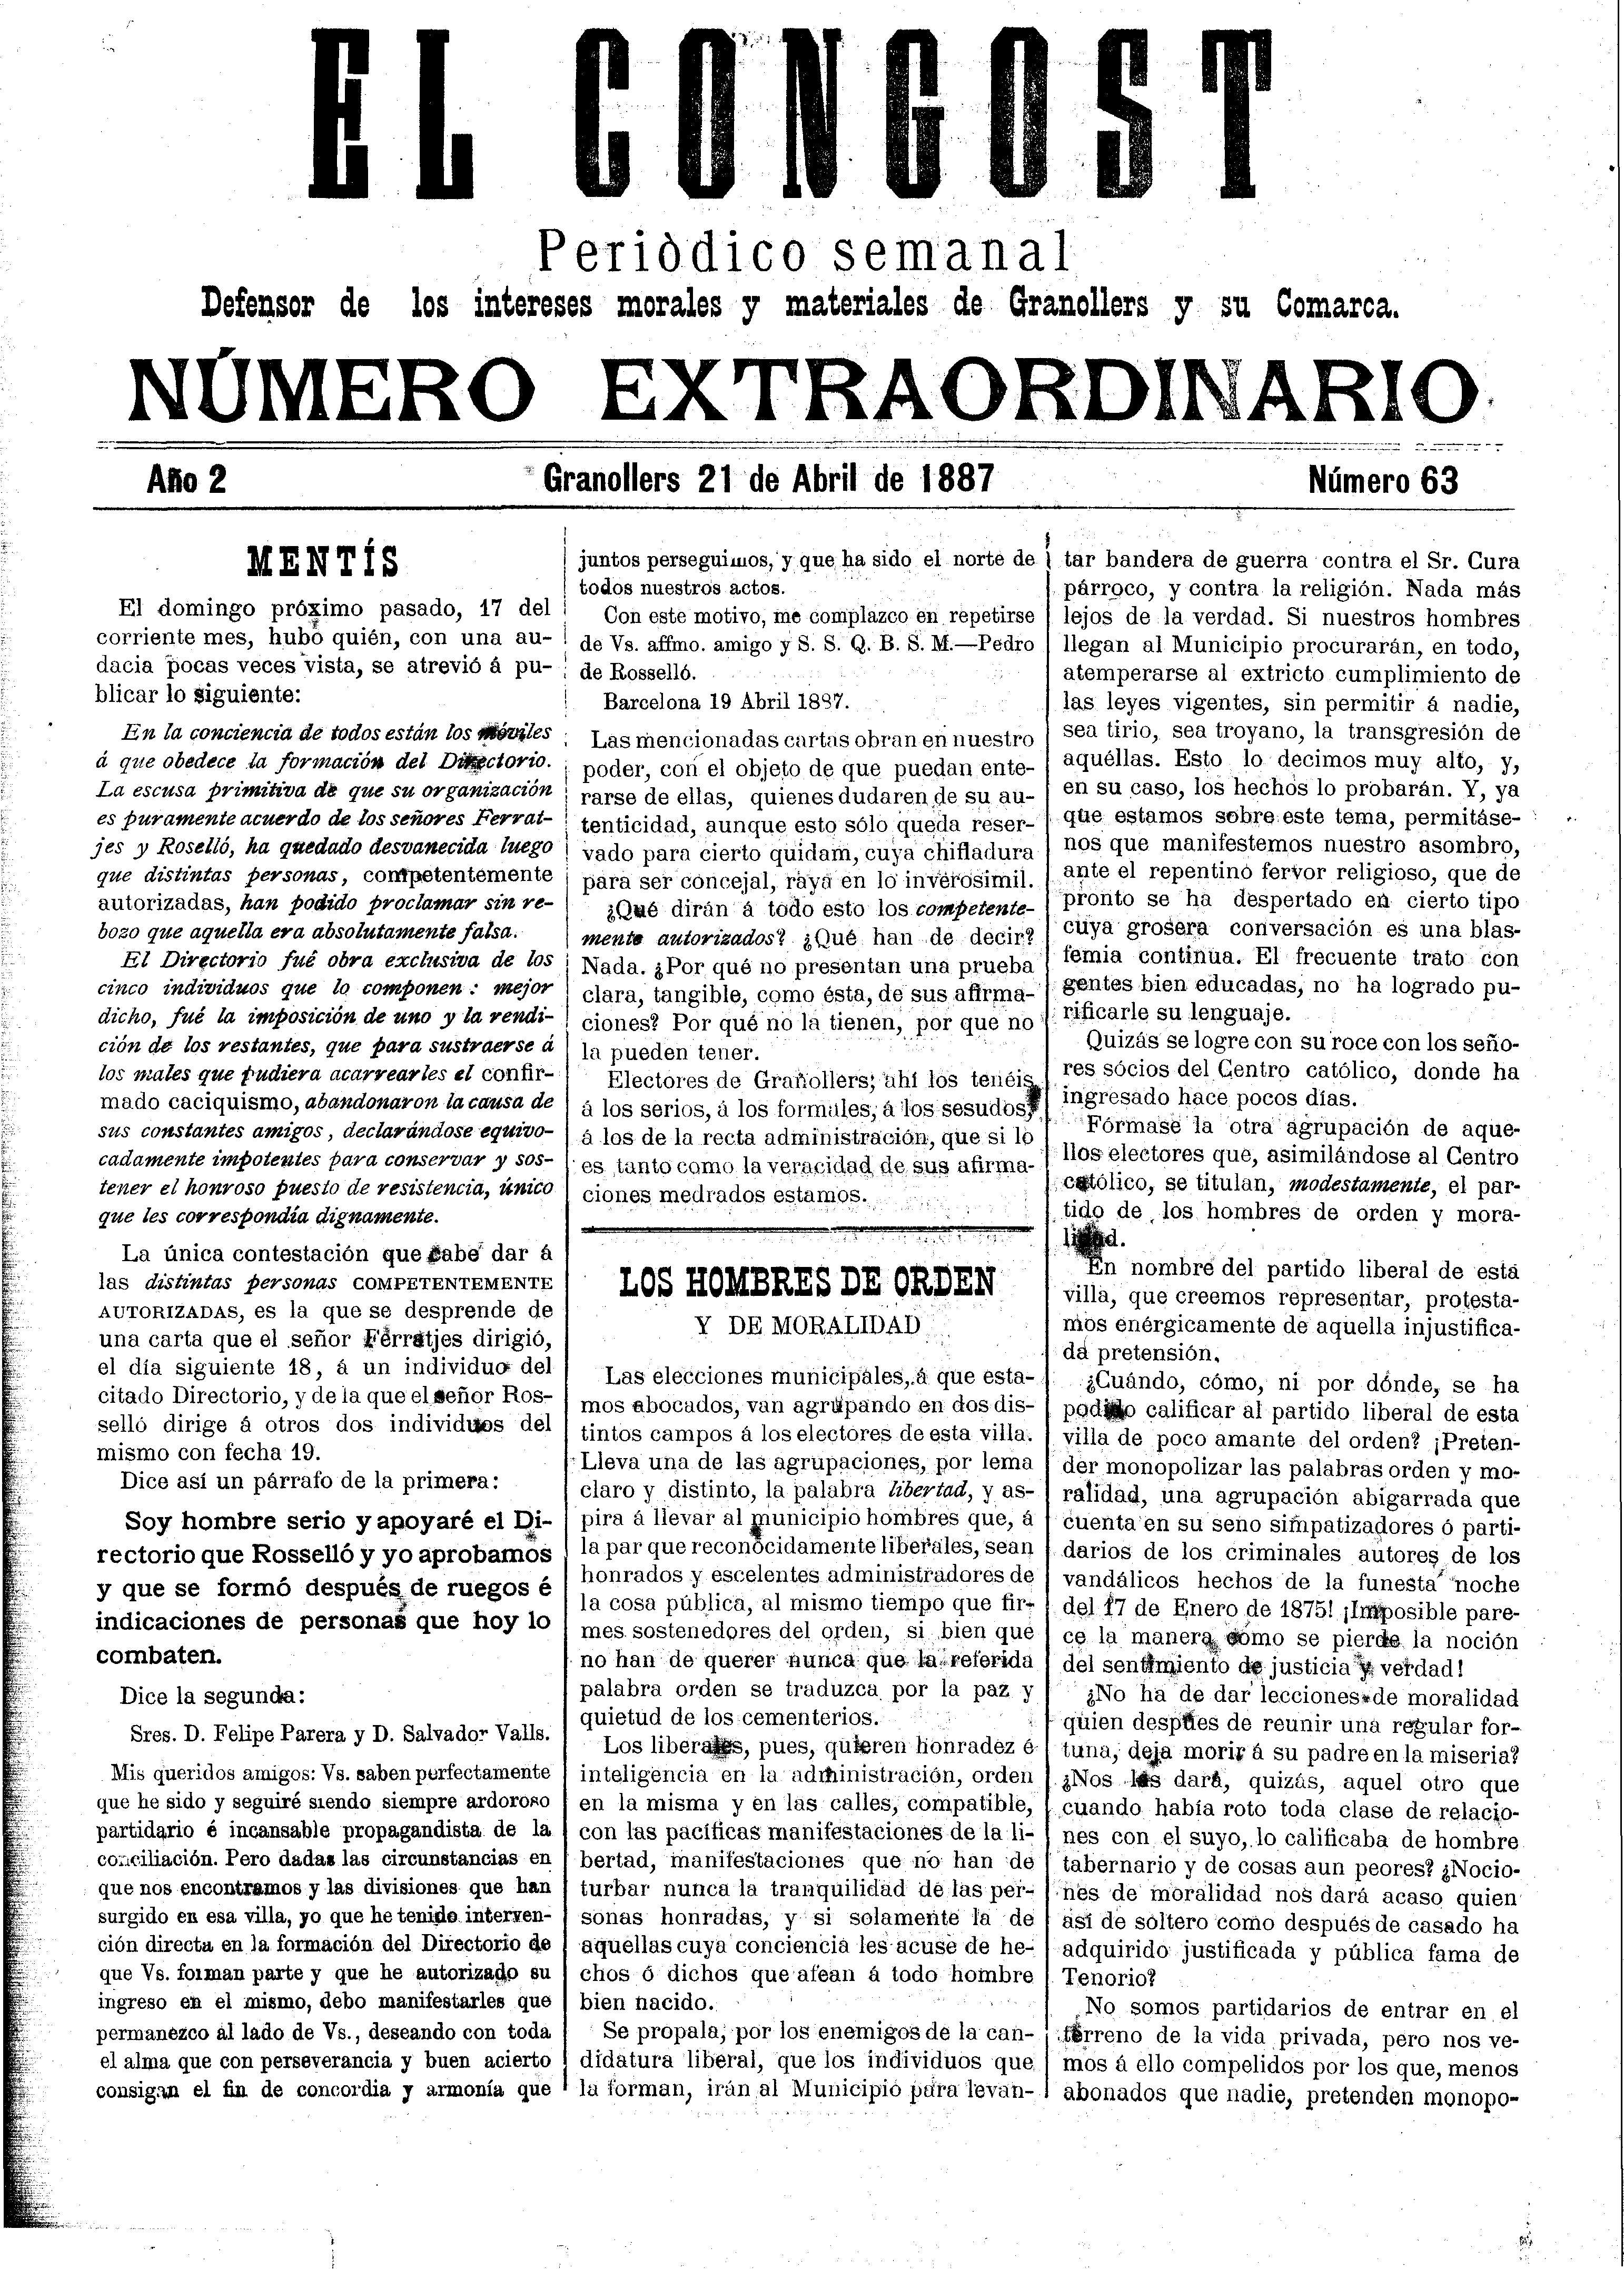 El Congost, 21/4/1887 [Exemplar]